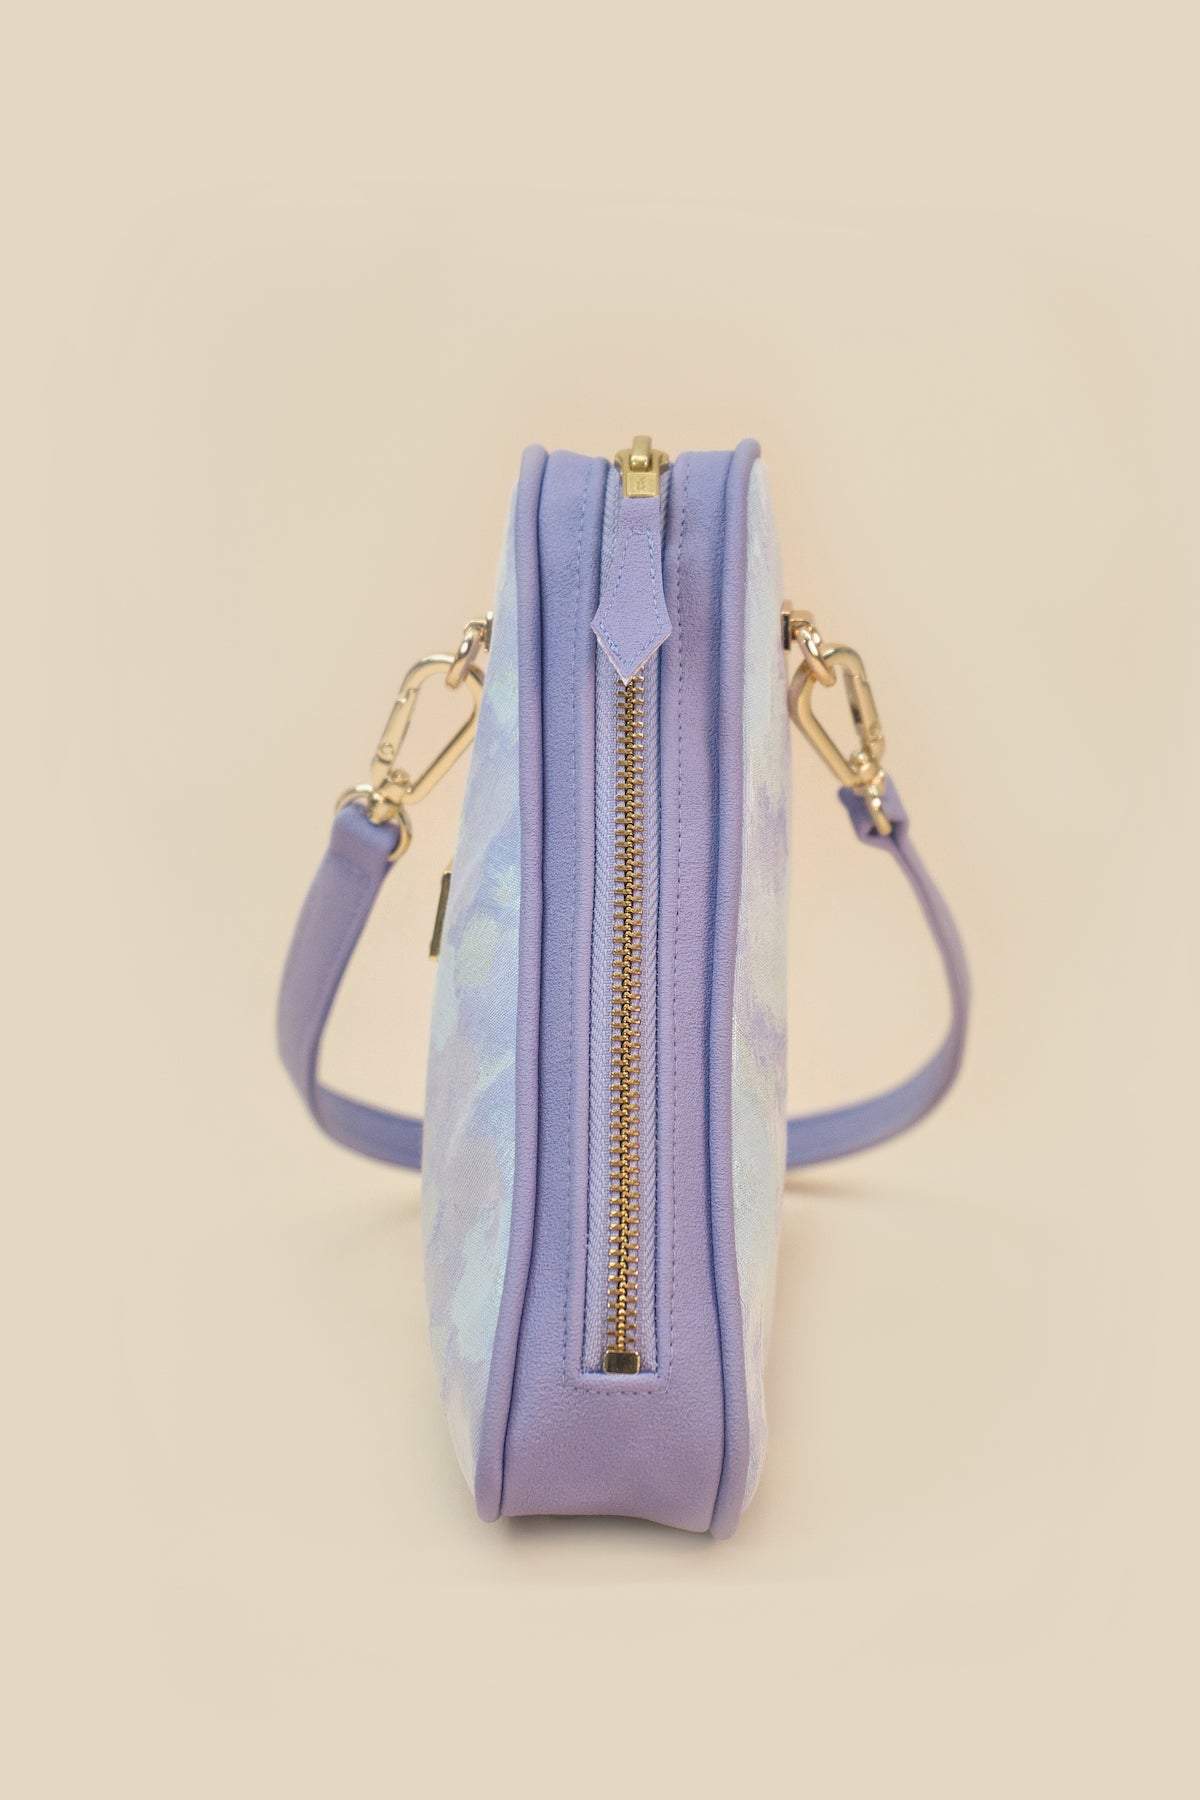 Triangle Bag "JARDIM" - lilac - Manuel Essl Design